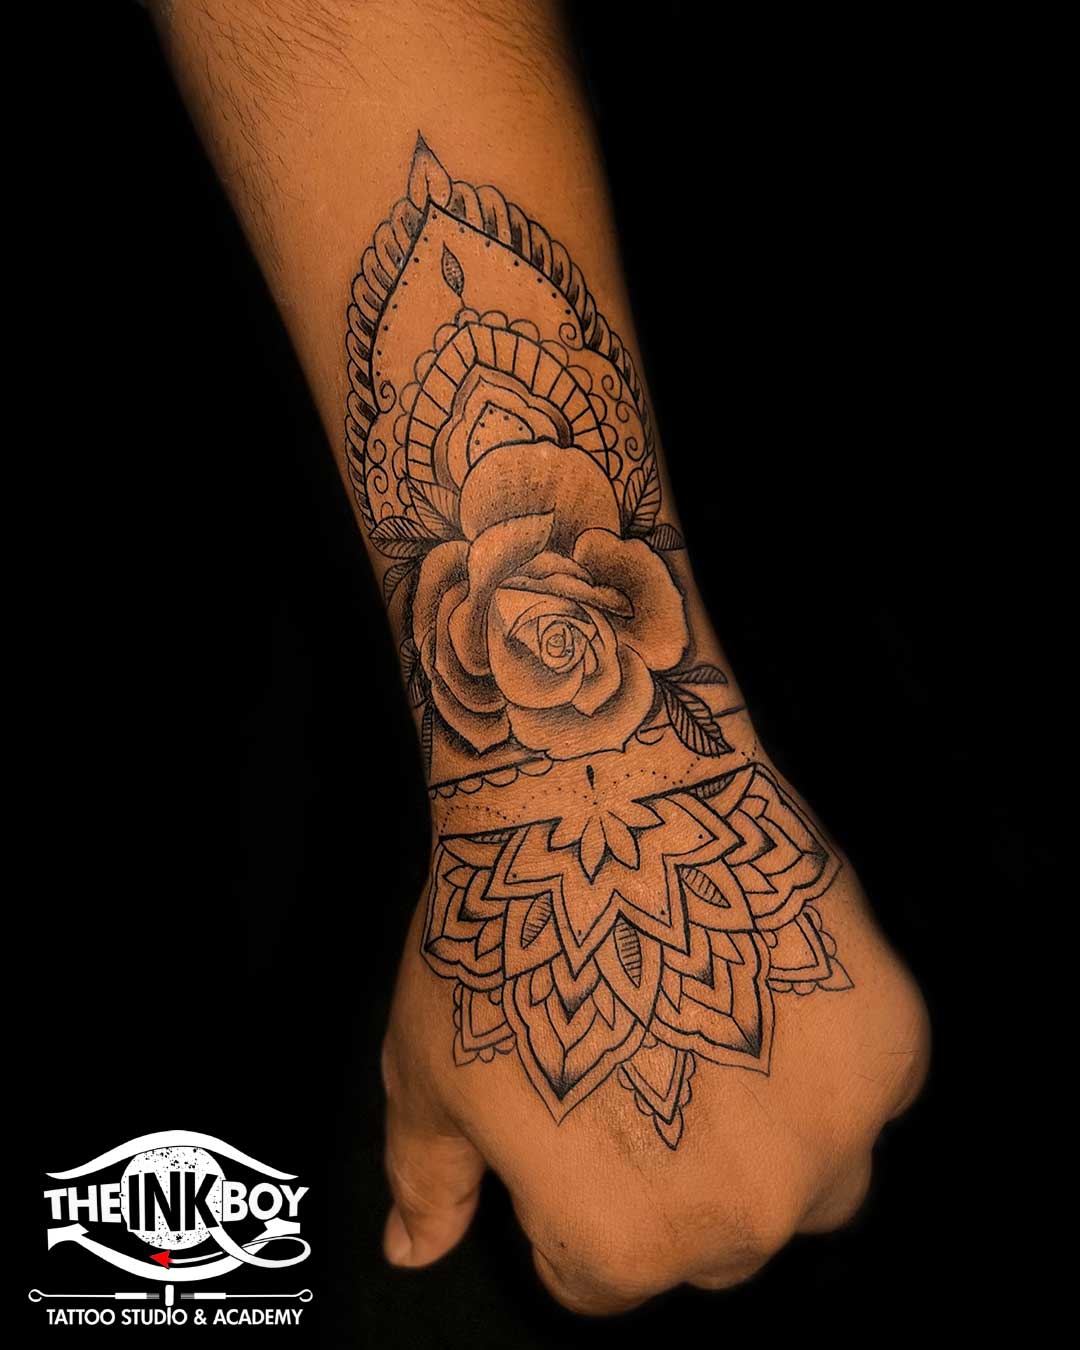 Hand tattoo designs।।।।tattoo designs on hand।। mandala tattoo  designs।।rose tattoo designs on hand - YouTube